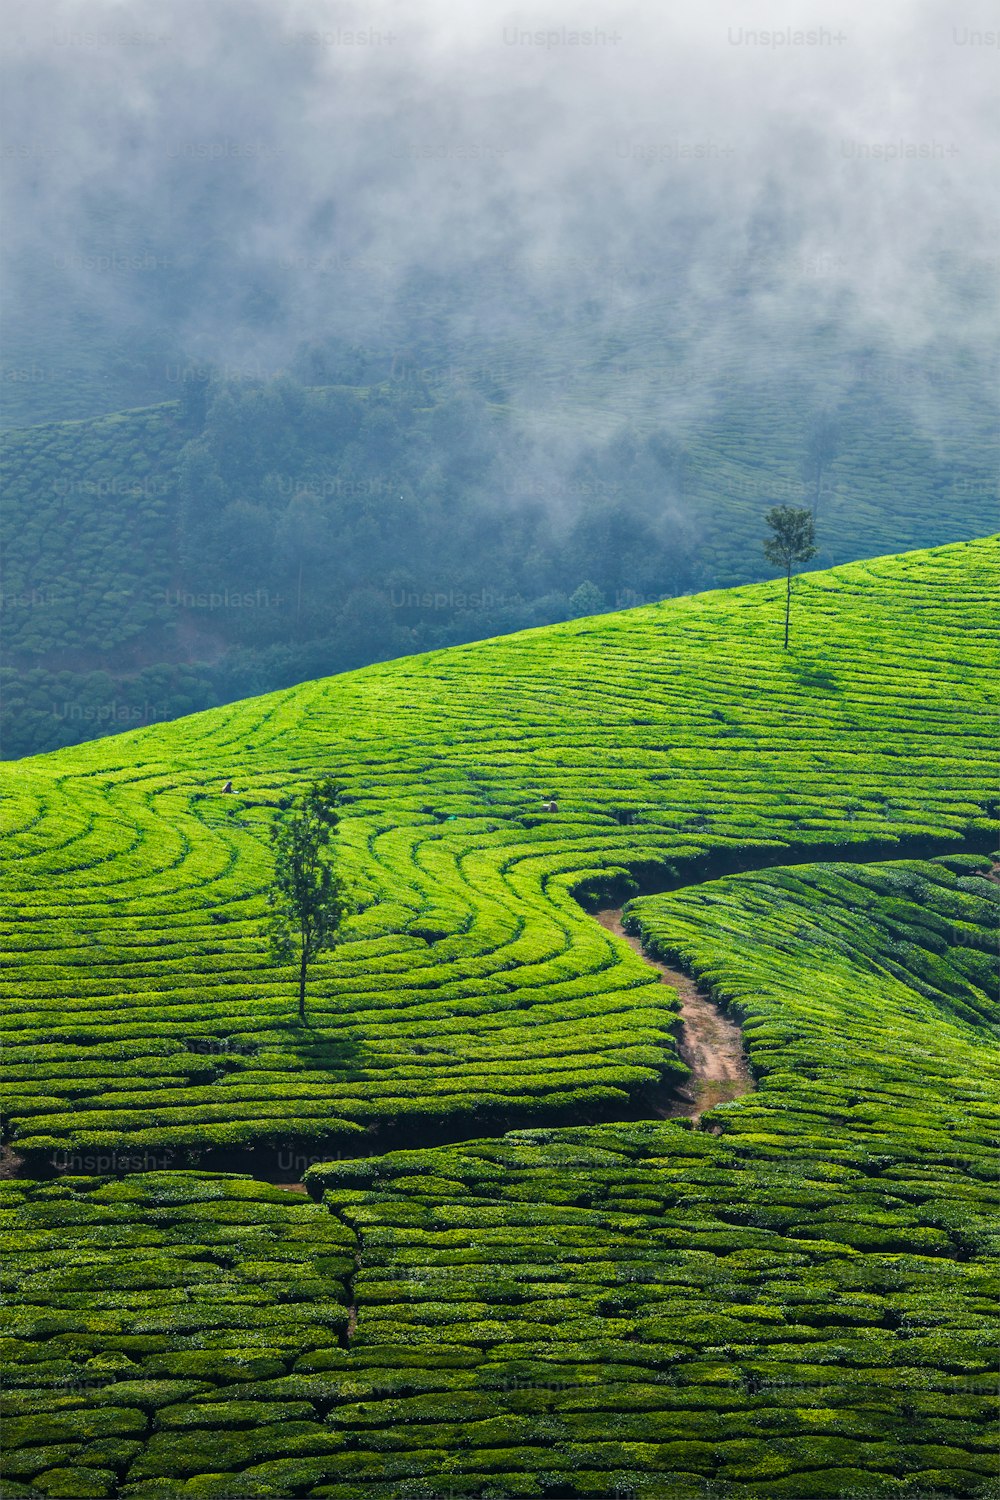 Kerala Inde voyage fond - plantations de thé vert à Munnar, Kerala, Inde - attraction touristique